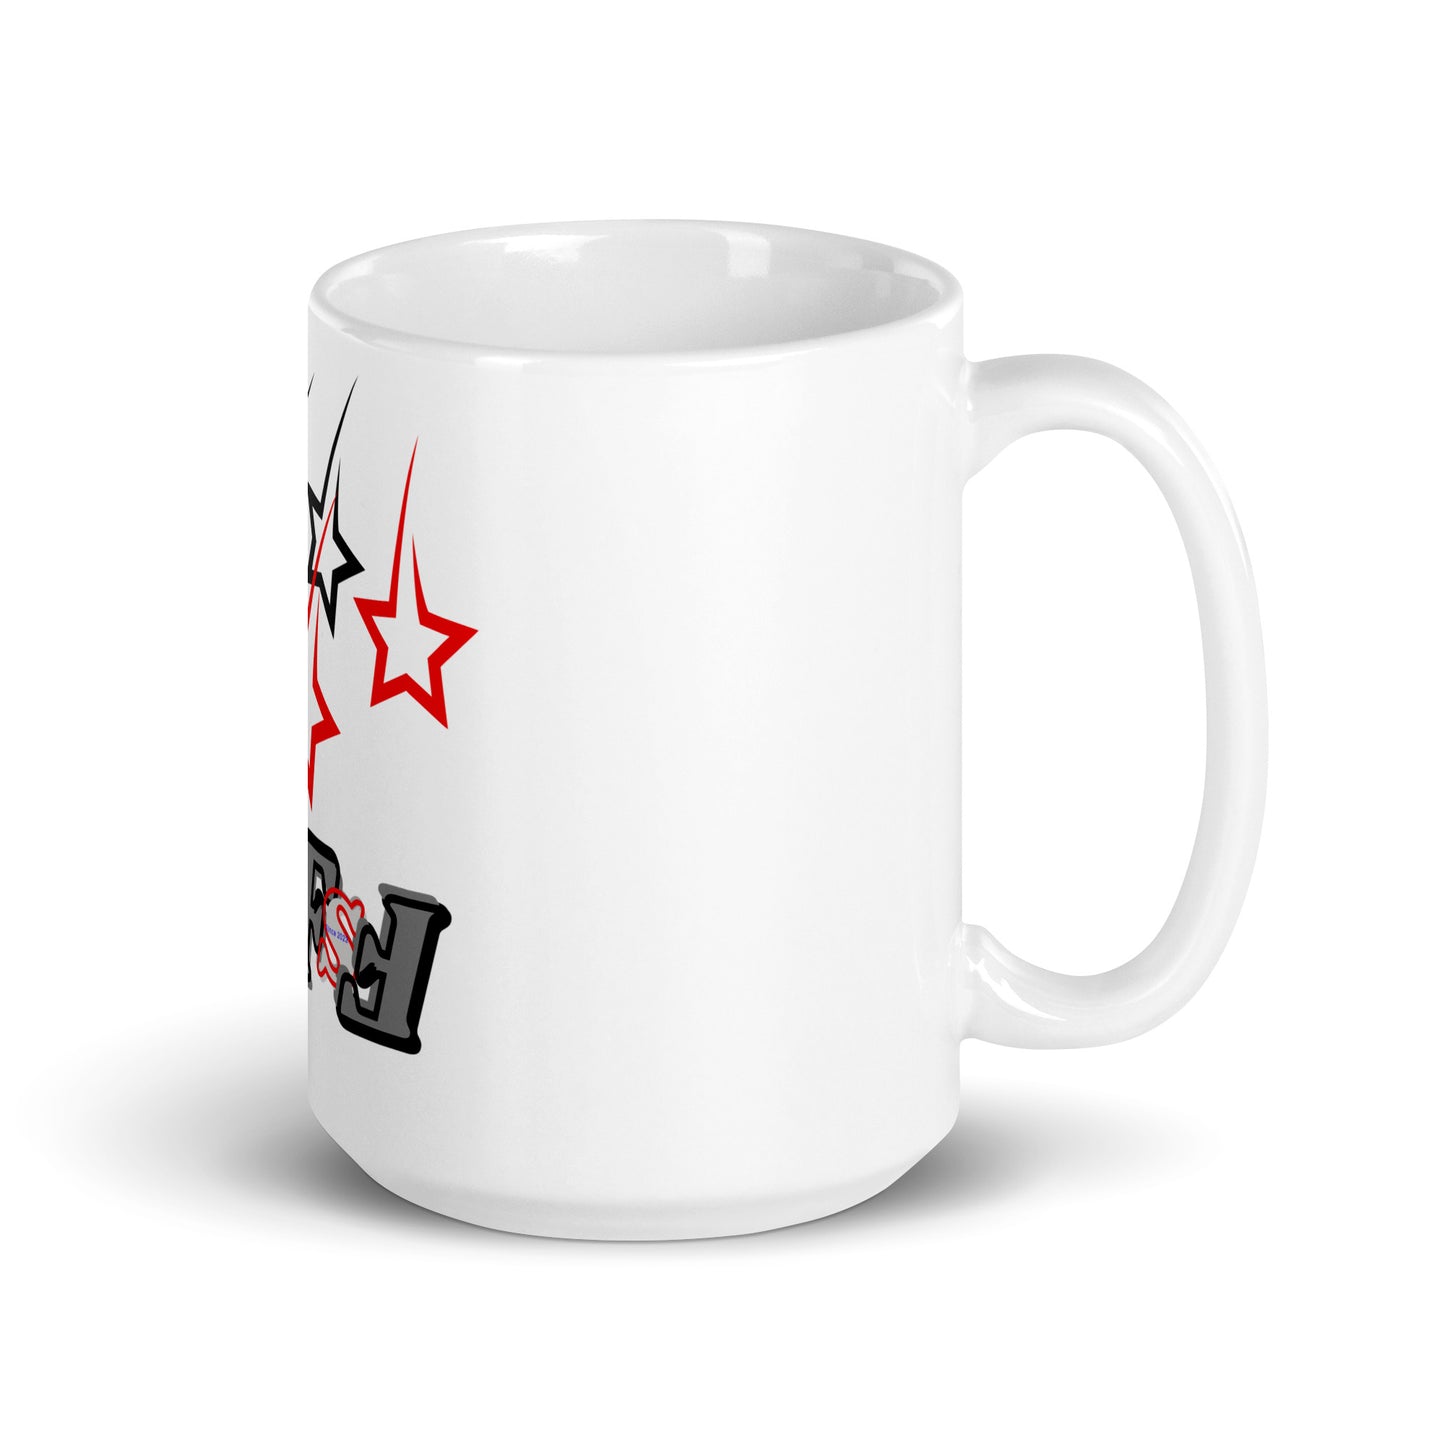 'Shooting Star' Dark - Five Star Fresh White glossy mug